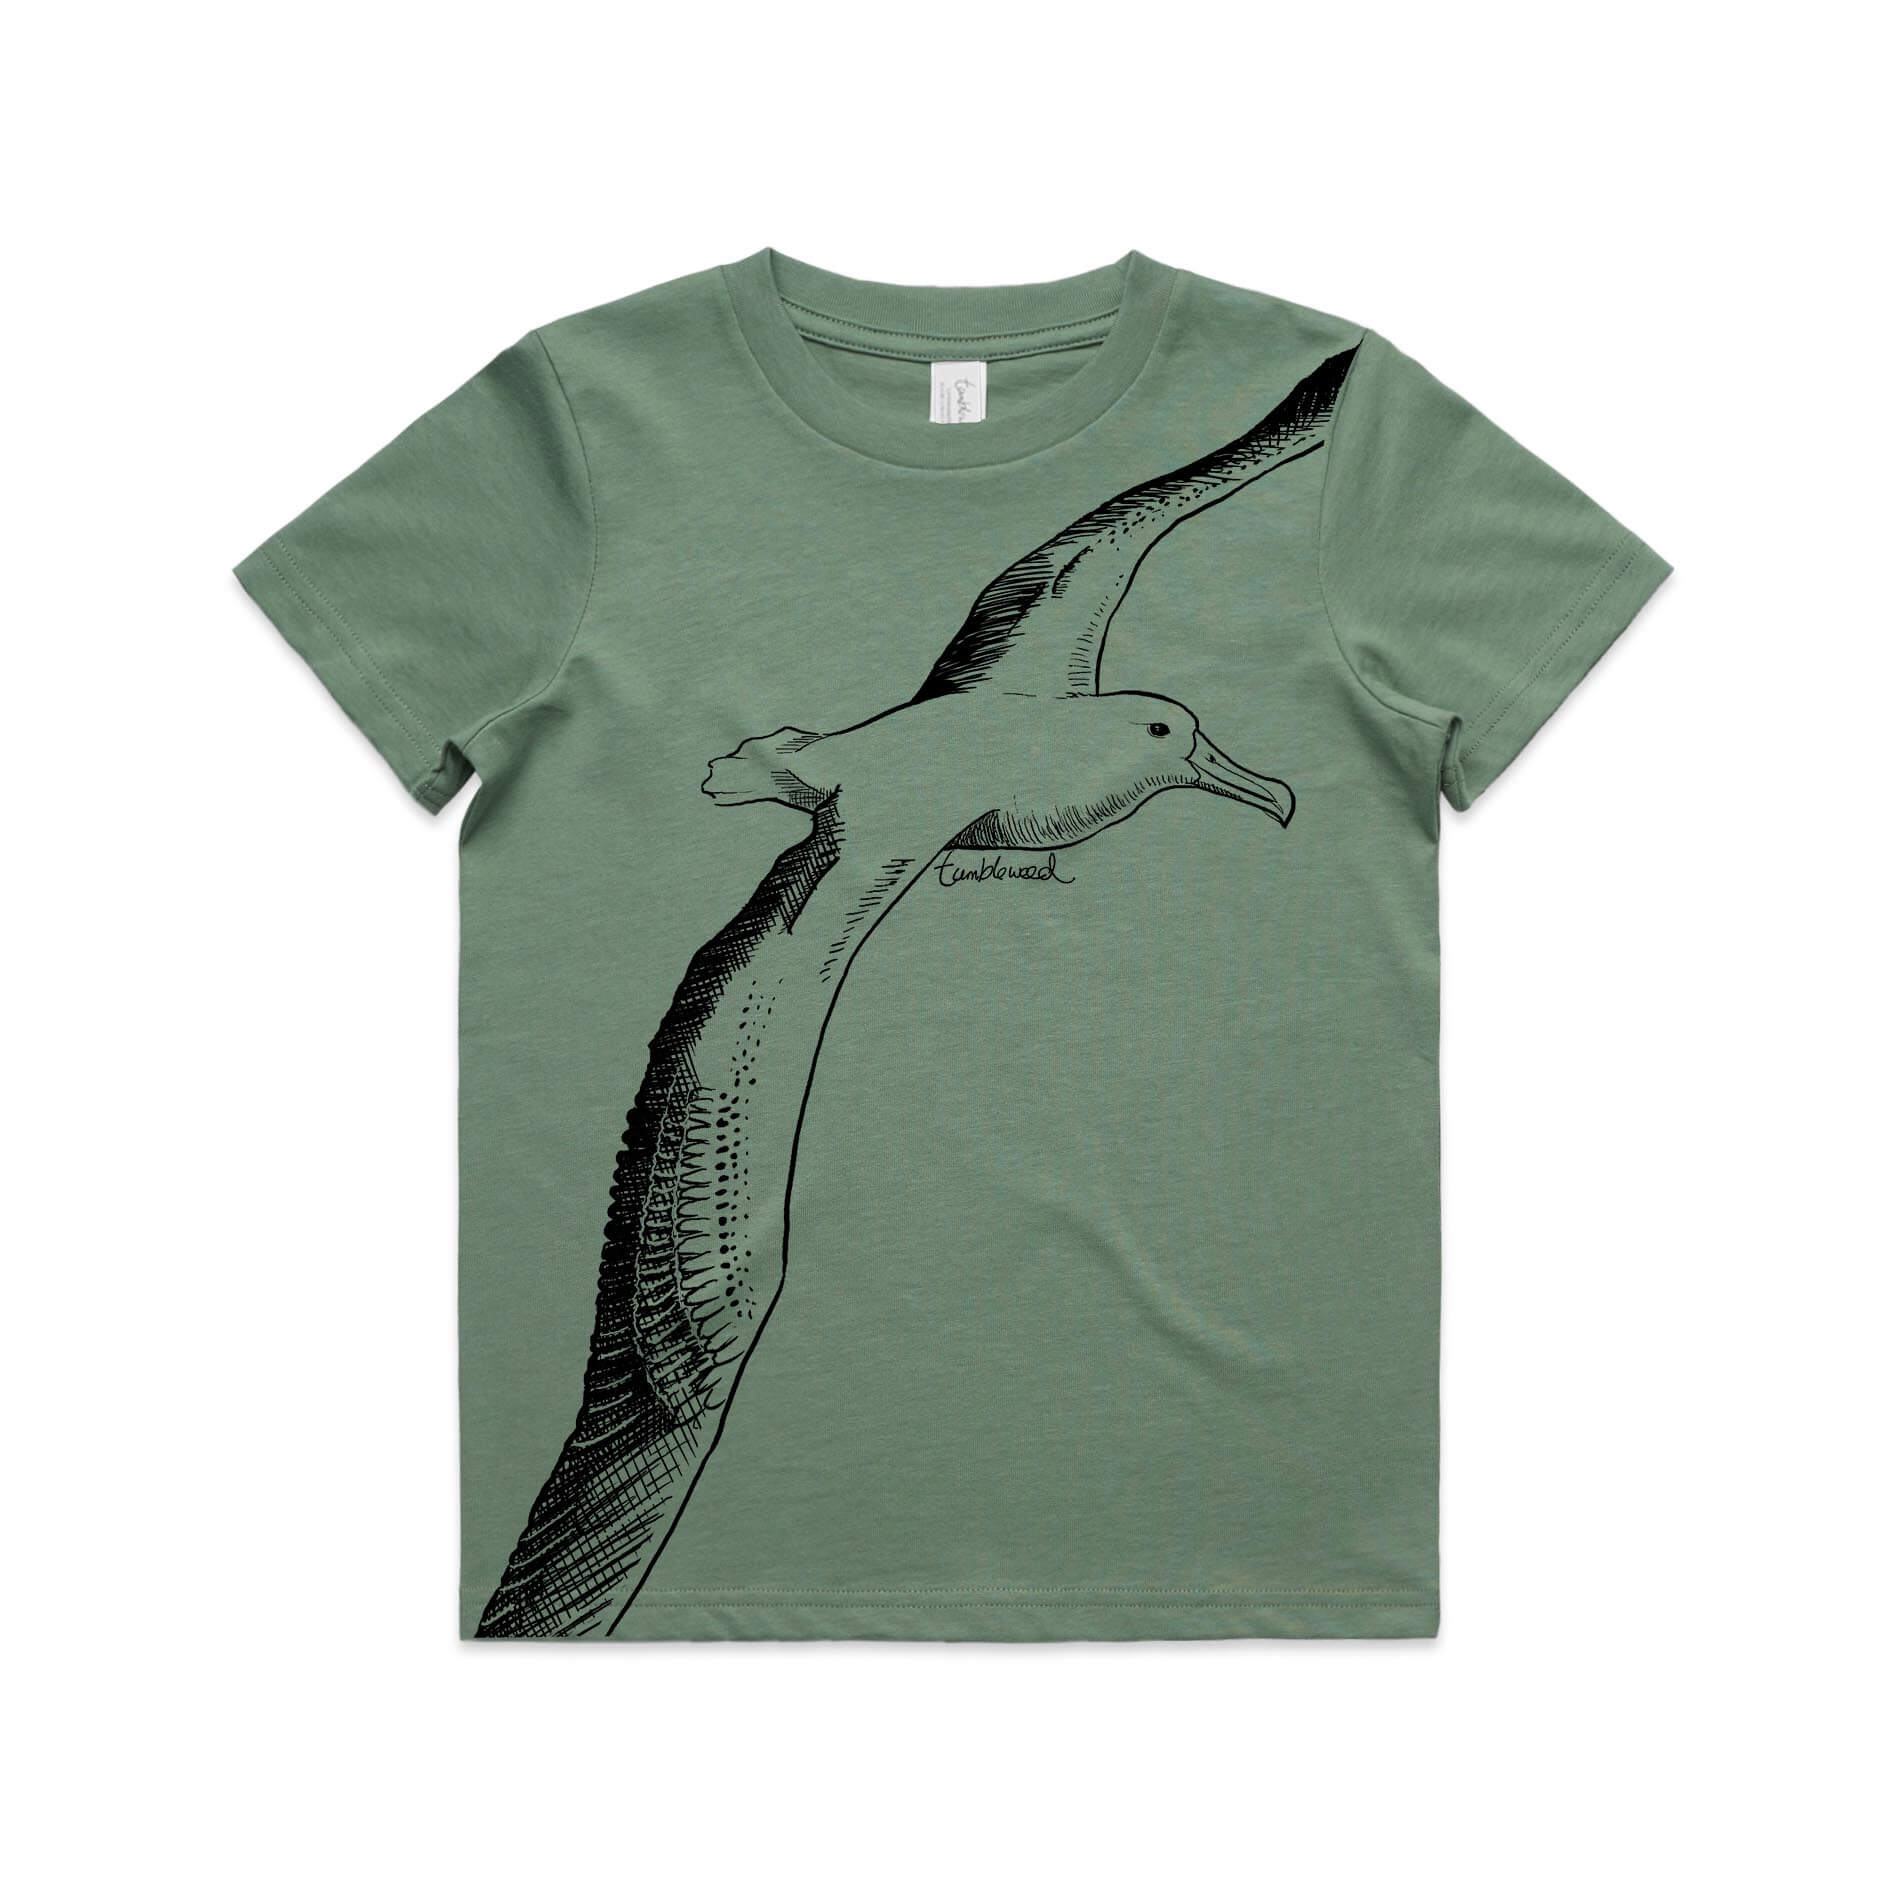 Sage, cotton kids' t-shirt with screen printed albatross design.